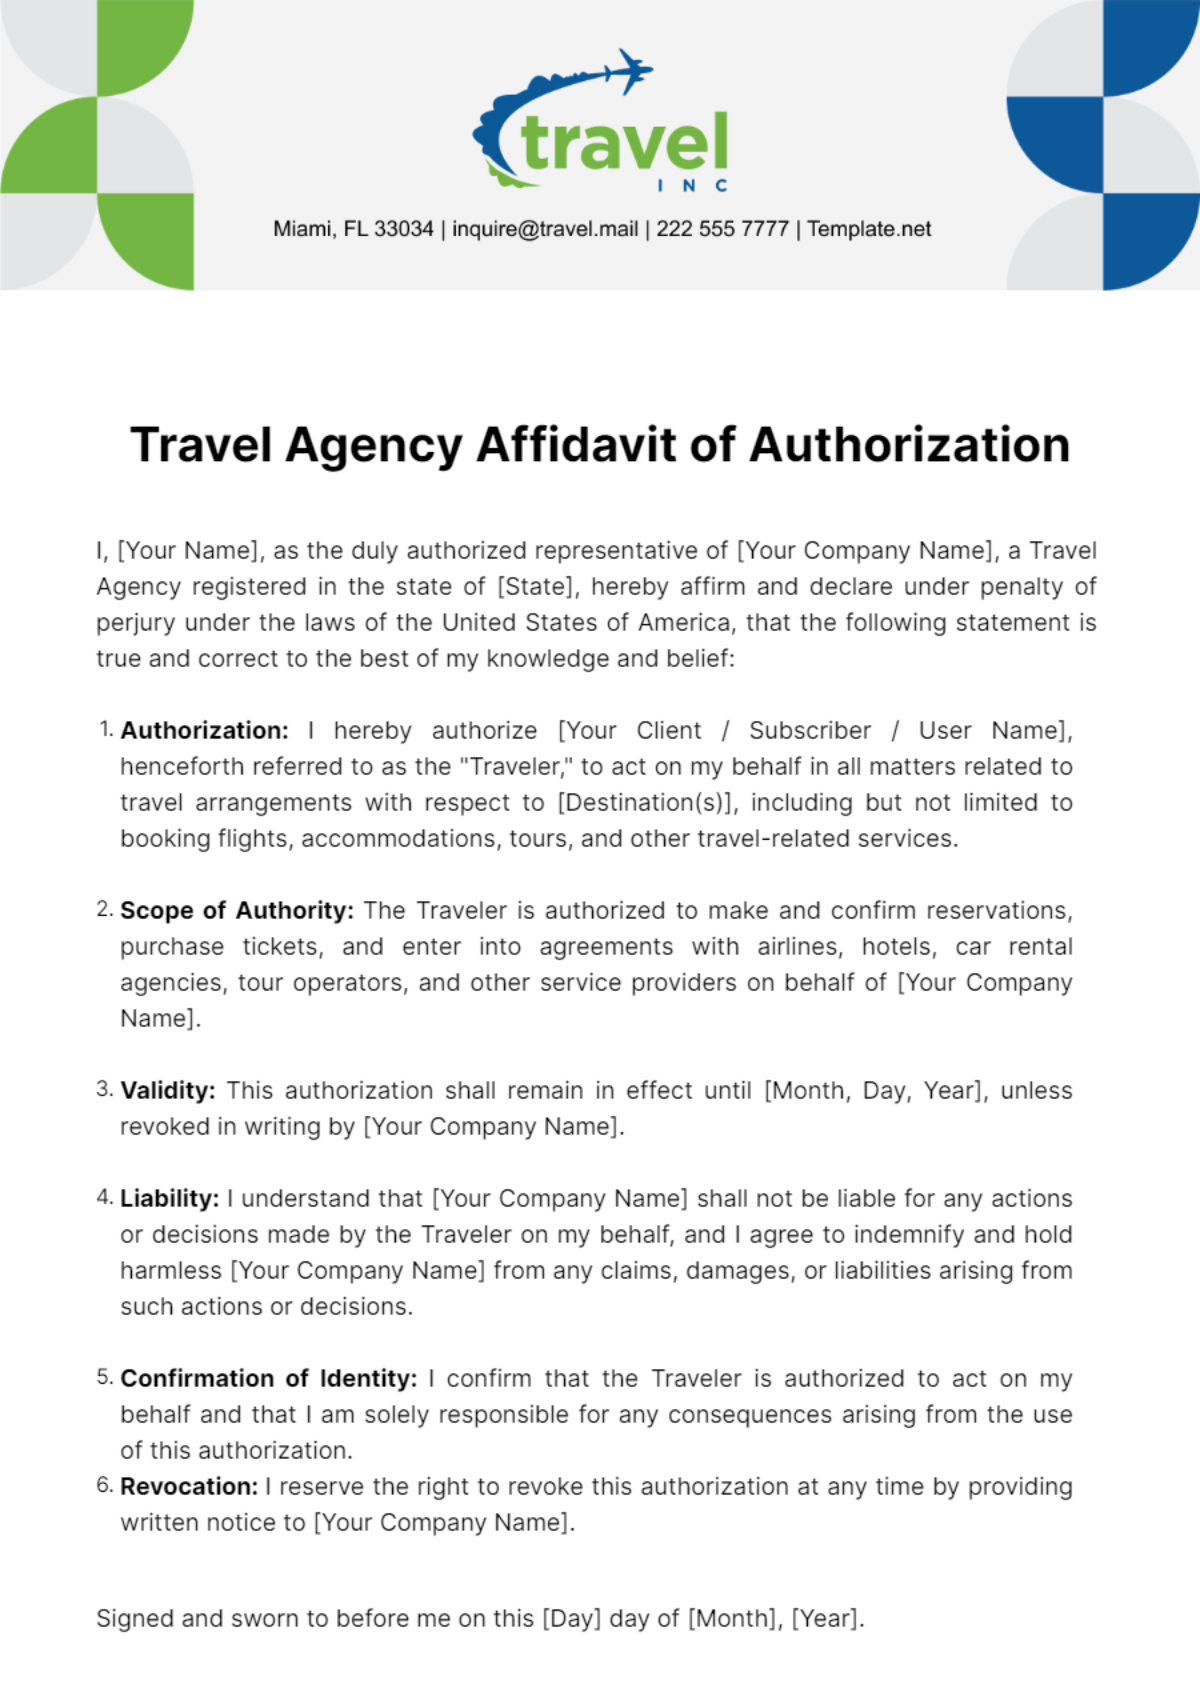 Free Travel Agency Affidavit of Authorization Template